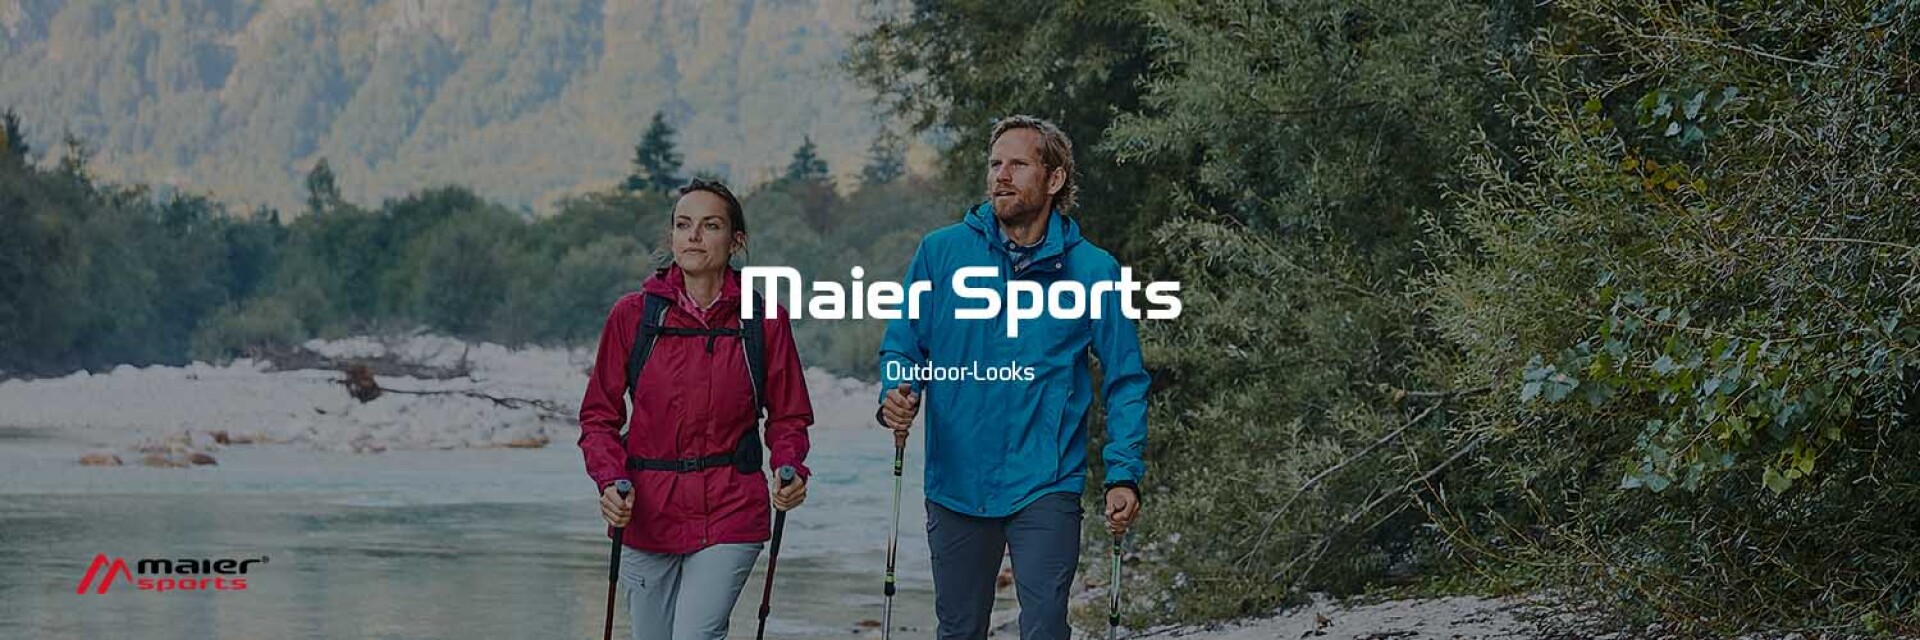 Maier Sports Outdoor-Look